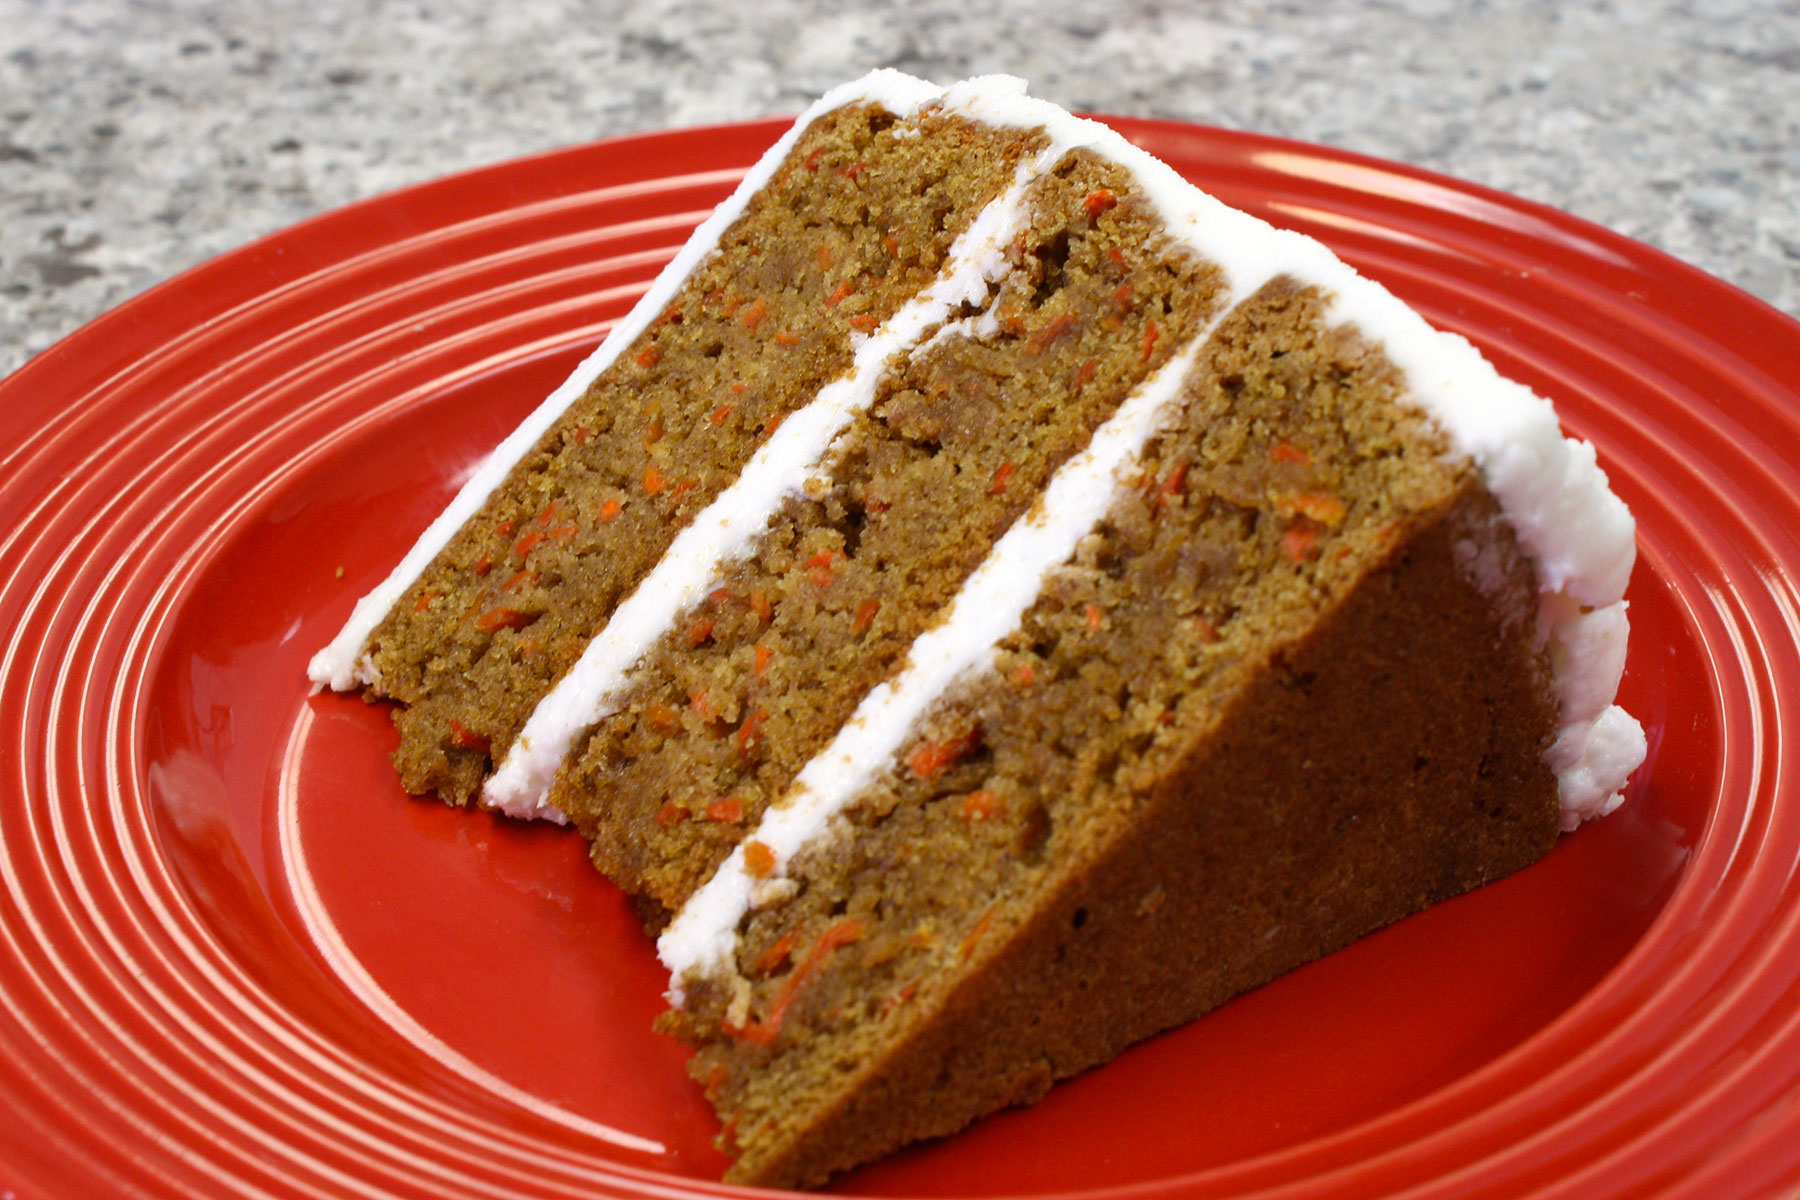 Nytimes carrot cake recipe